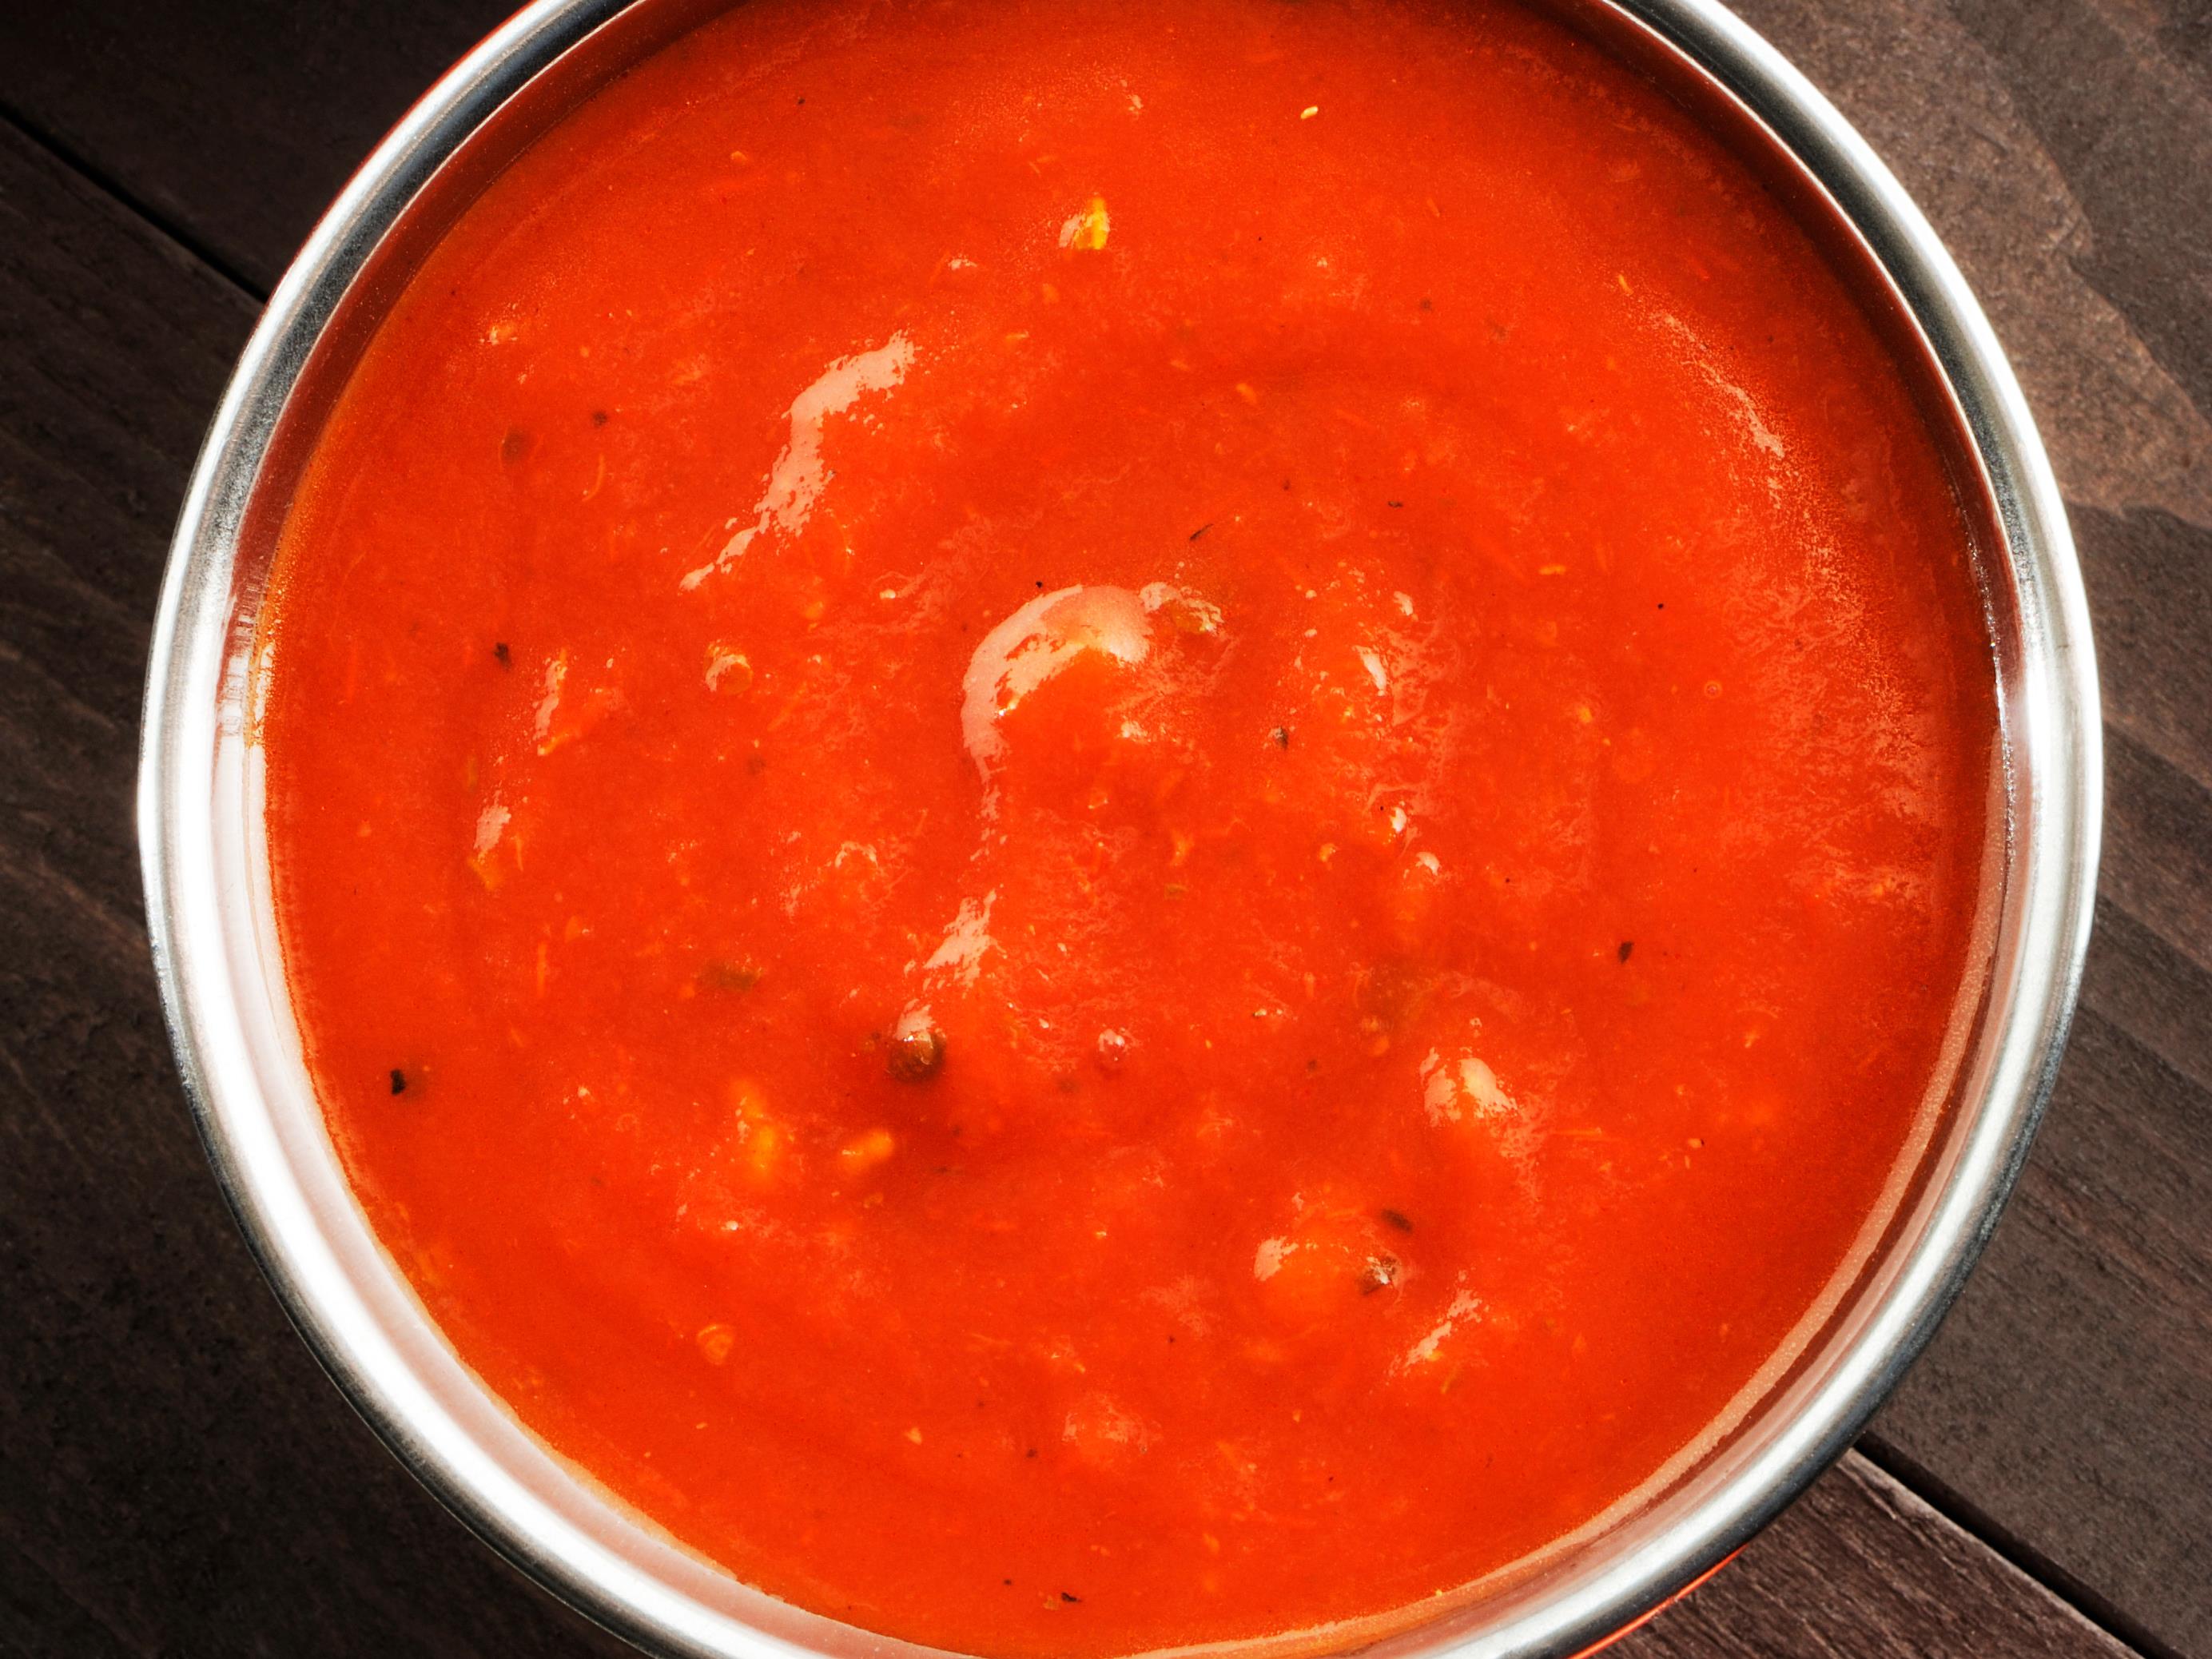 https://images.radio-canada.ca/v1/alimentation/recette/4x3/sauce-tomates-recettes-mordu.jpg